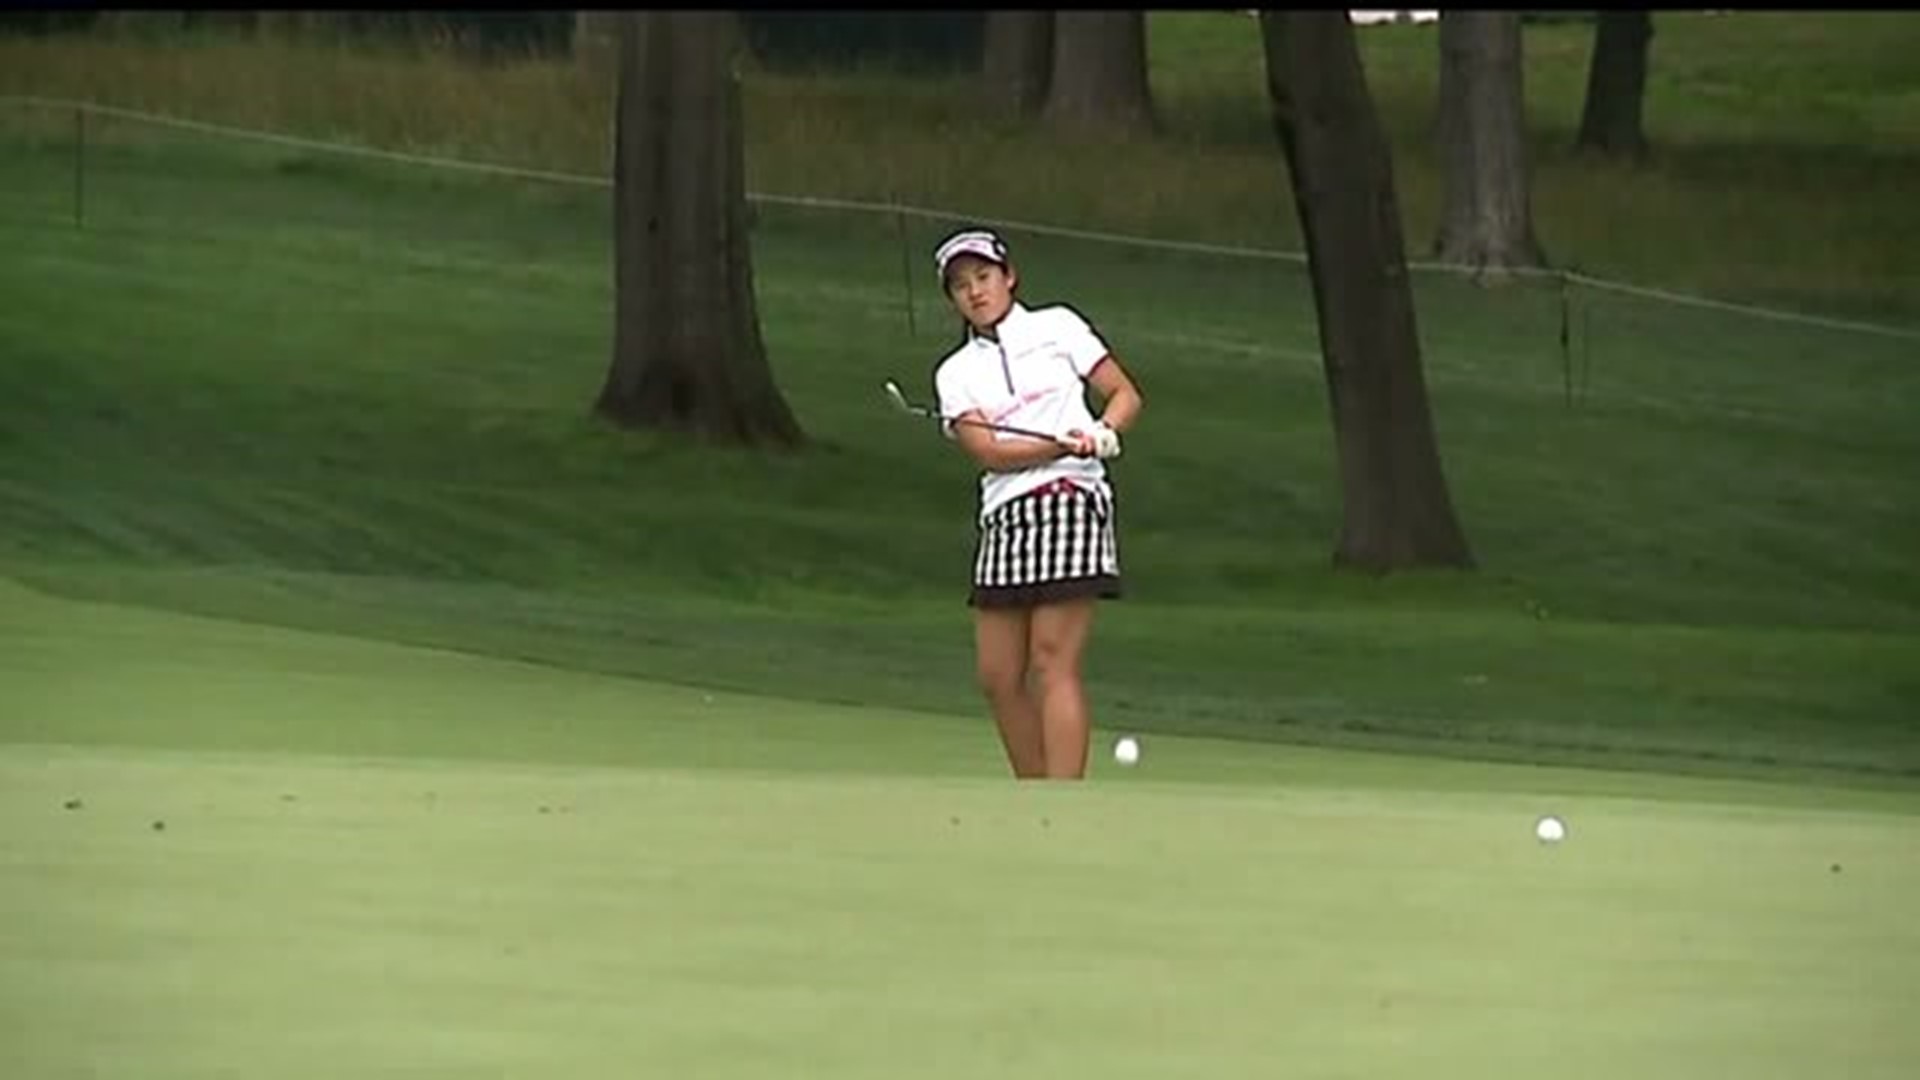 Youngest golfer in the U.S. Women`s Open